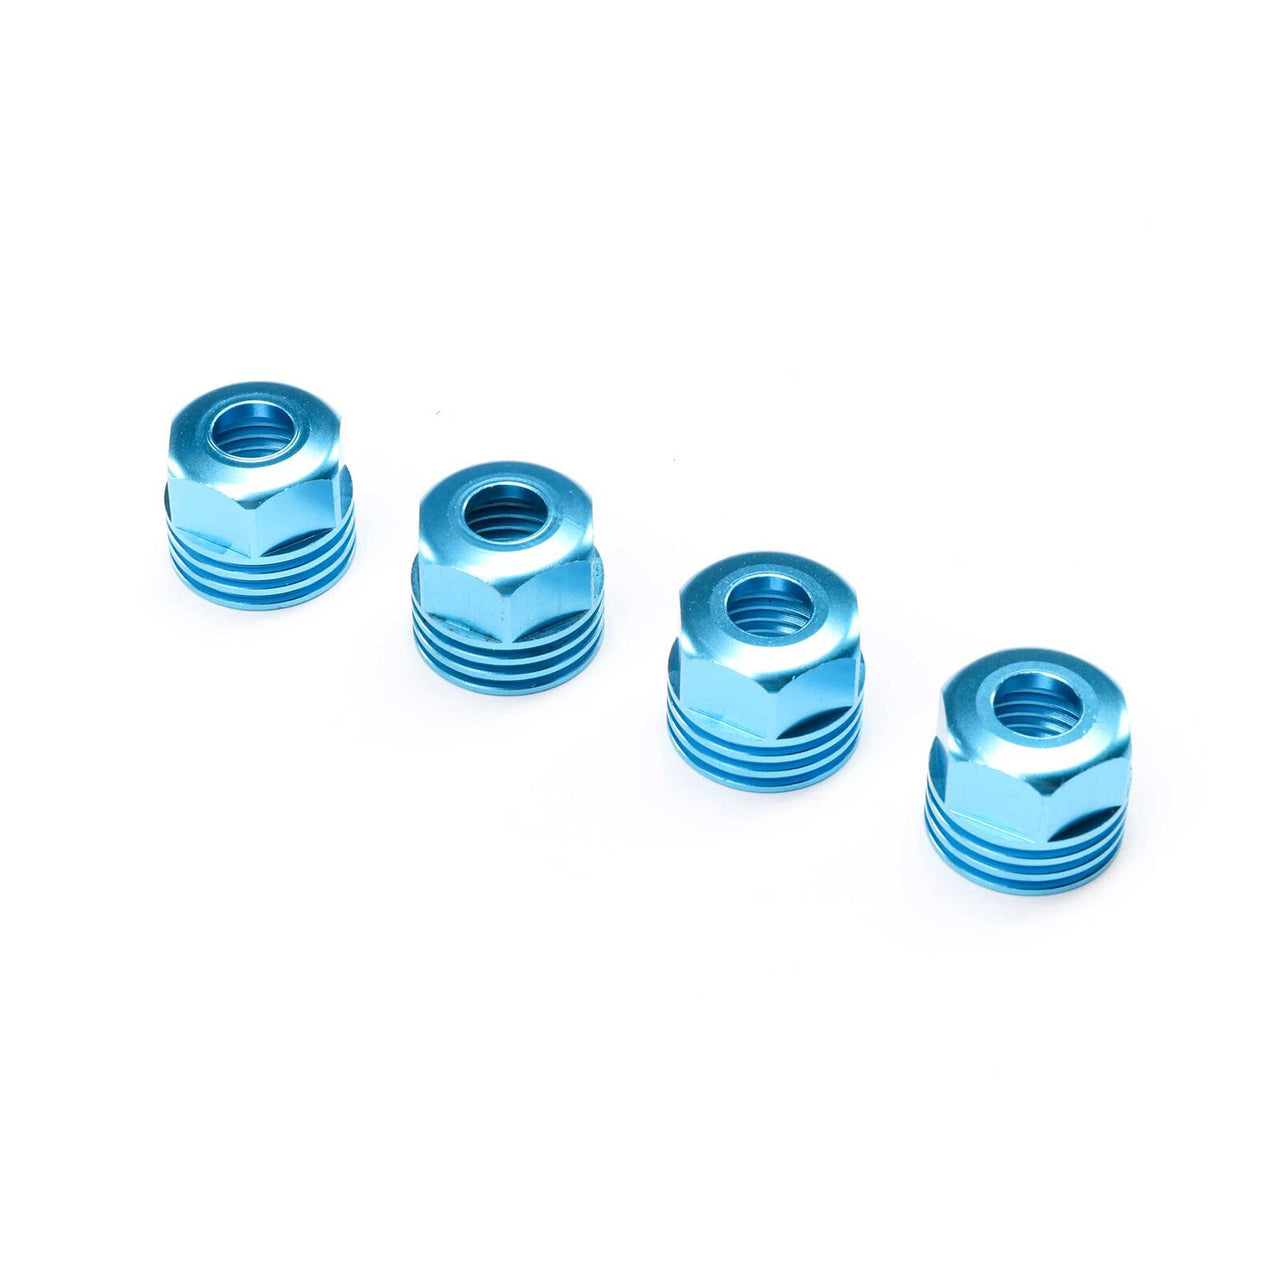 LOS253032 Capuchons d'amortisseur inférieurs, aluminium, bleu roi (4) : SBR 2.0 